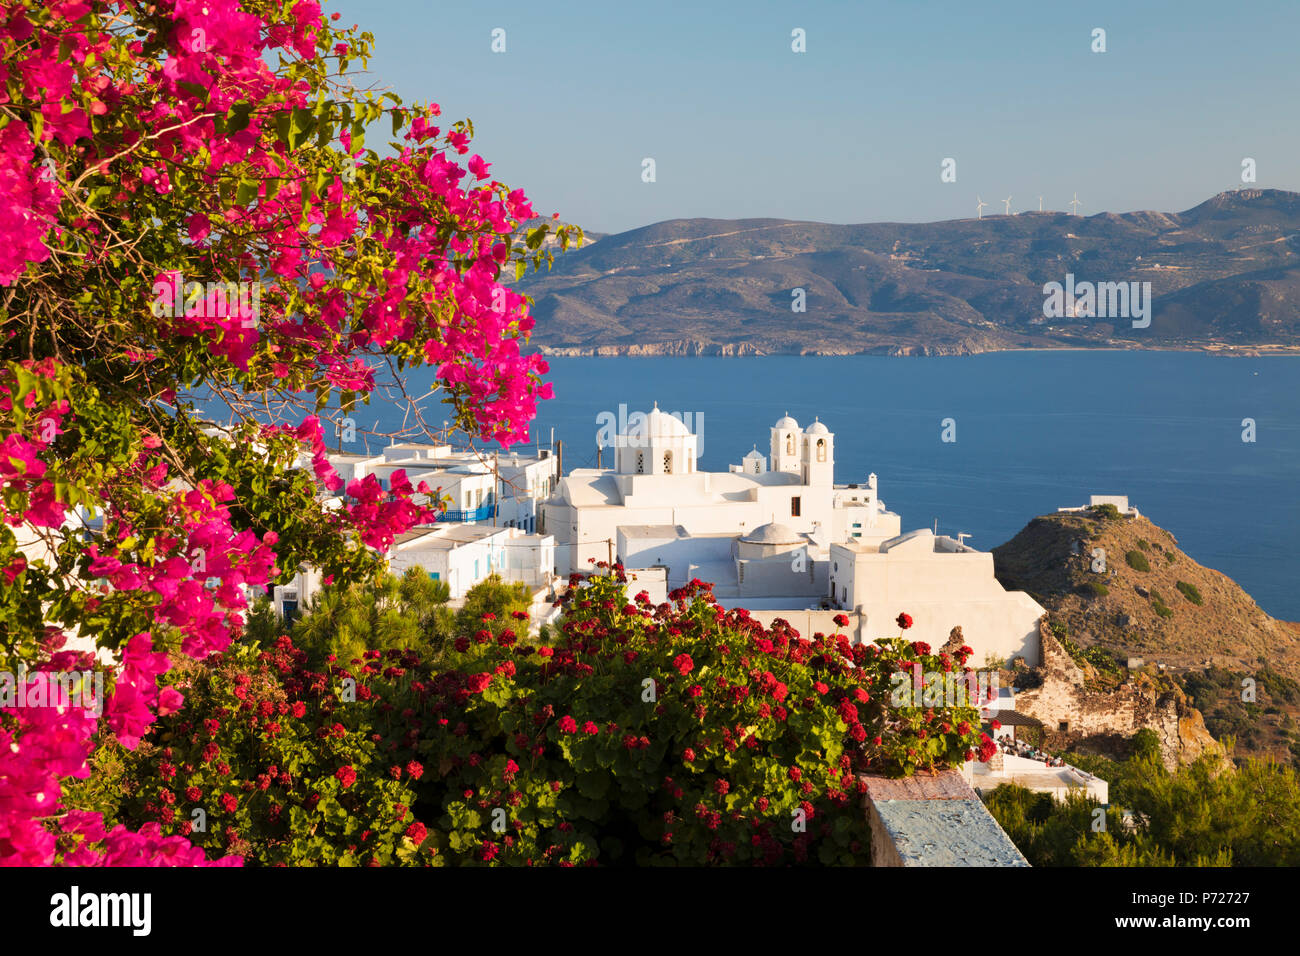 White old town of Plaka and Milos Bay with colourful bougainvillea, Plaka, Milos, Cyclades, Aegean Sea, Greek Islands, Greece, Europe Stock Photo